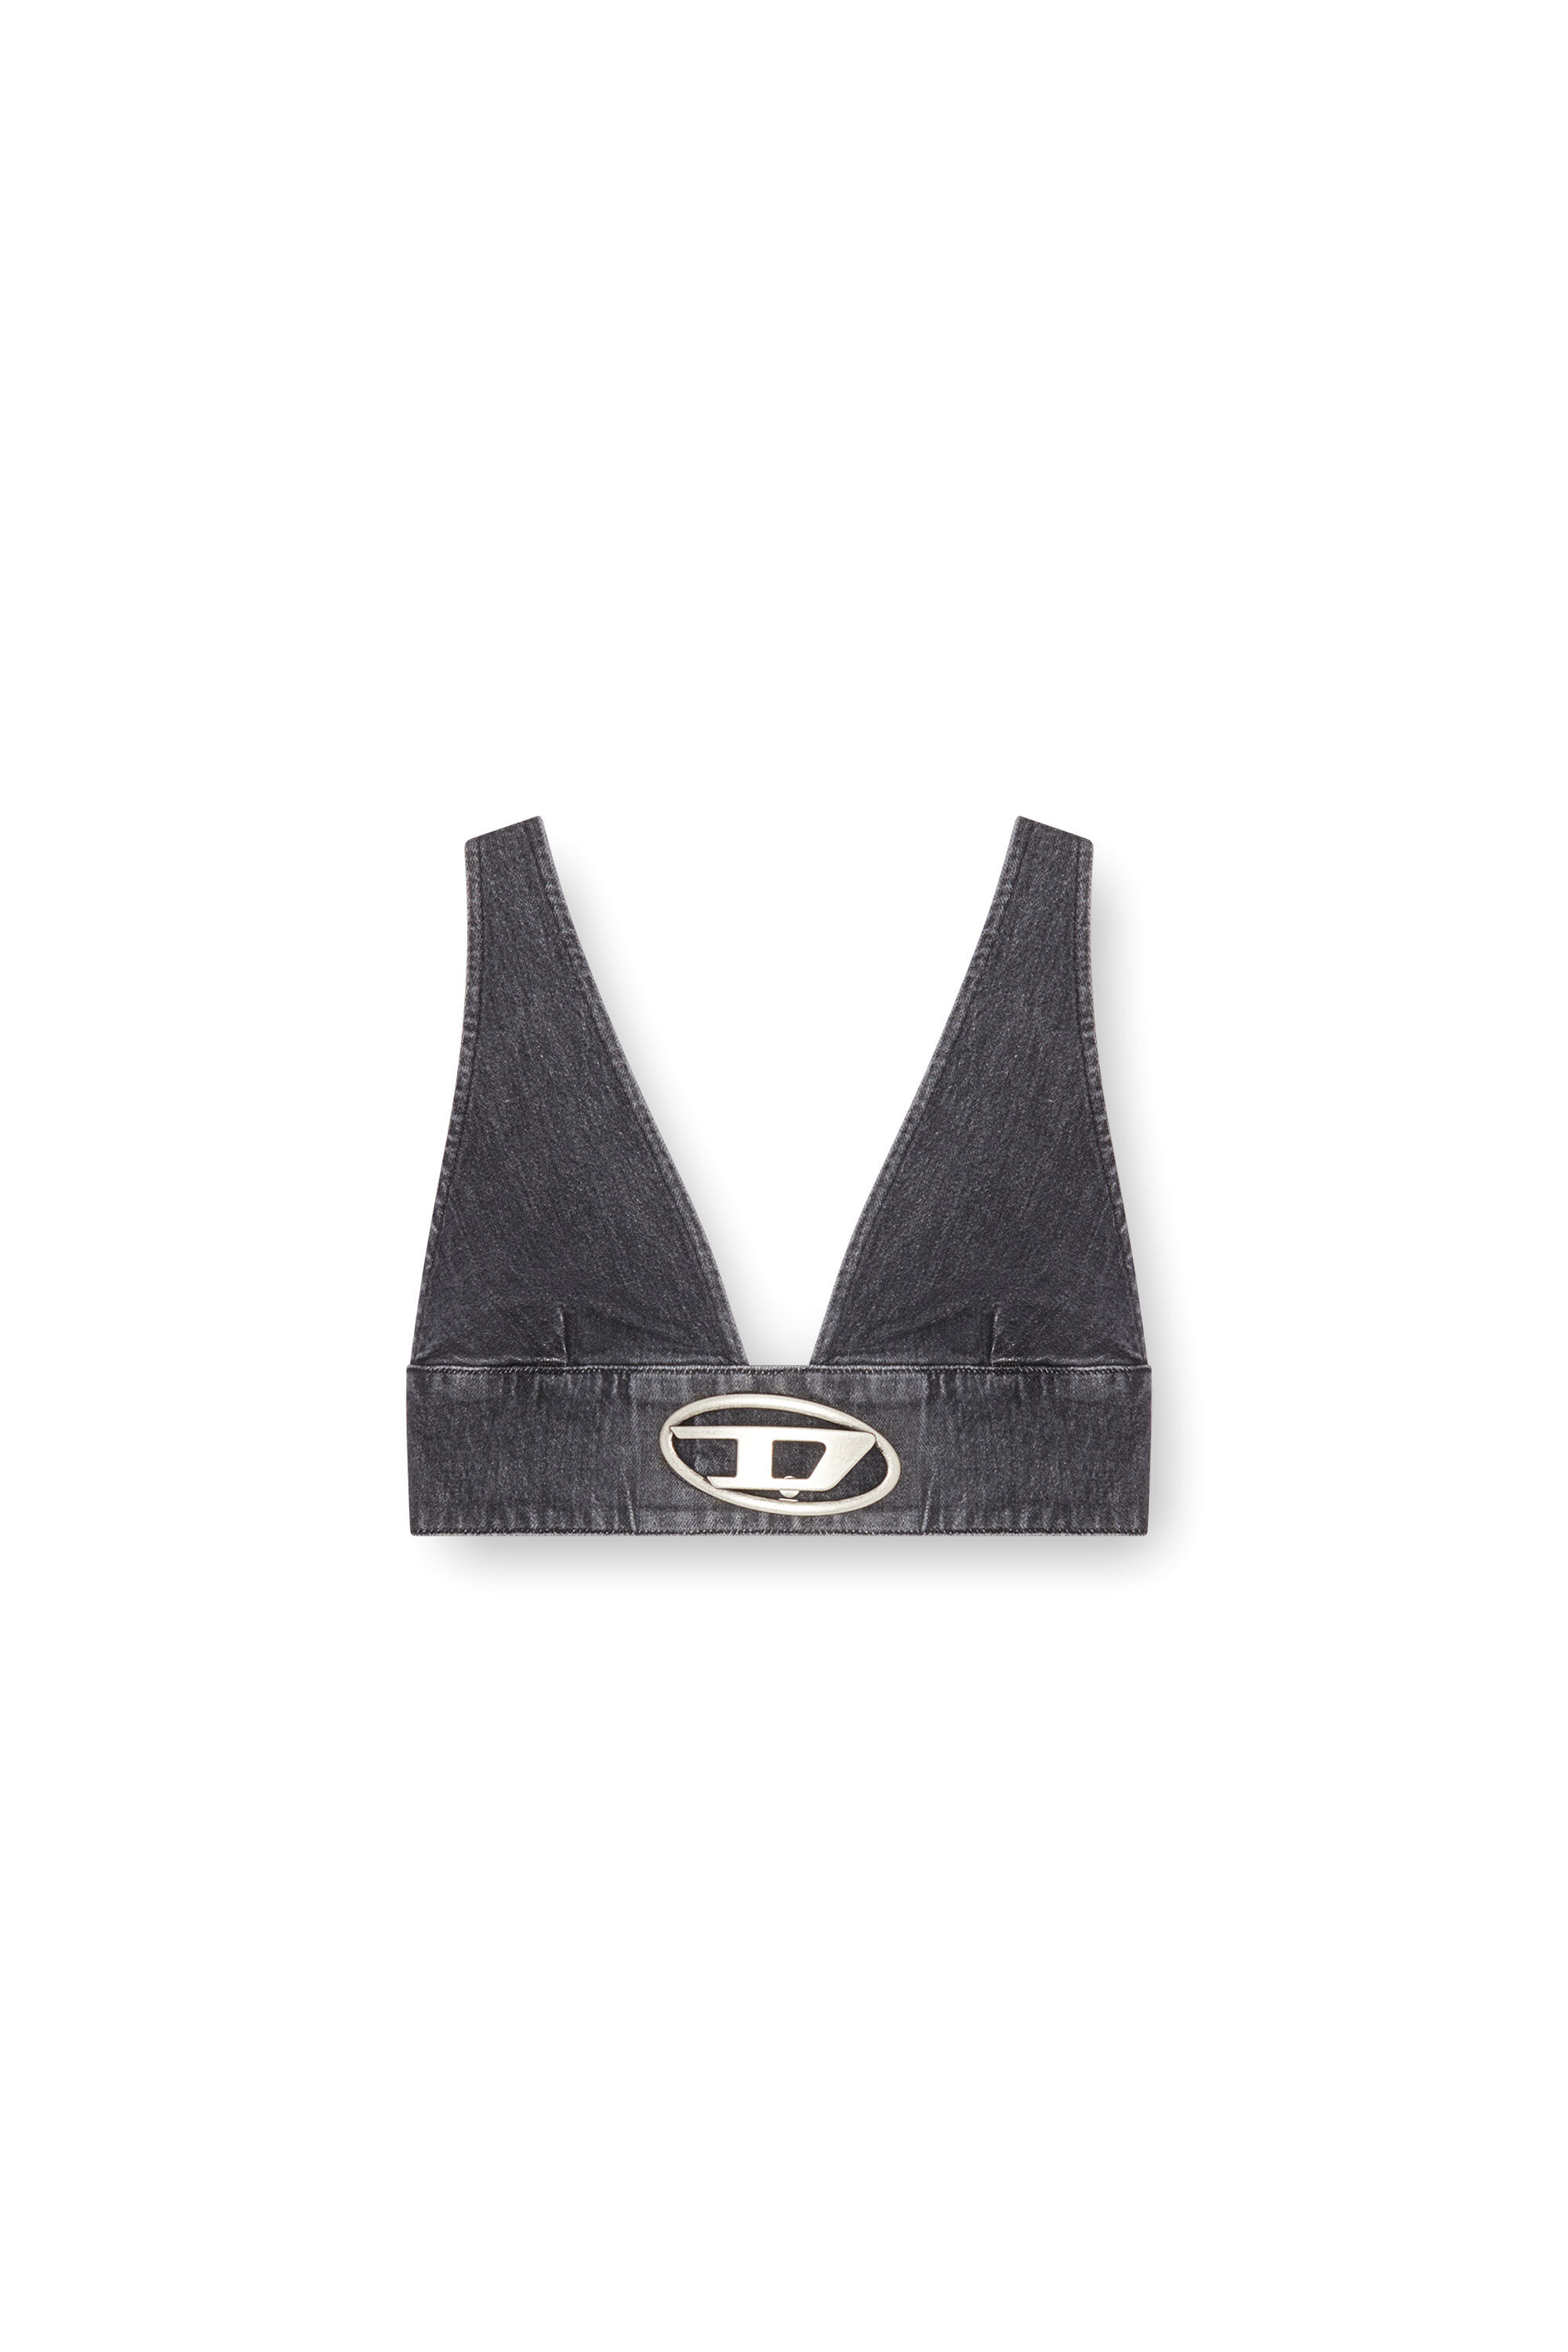 Diesel - DE-ELLY-S, Female Denim bra top with Oval D plaque in ブラック - Image 2